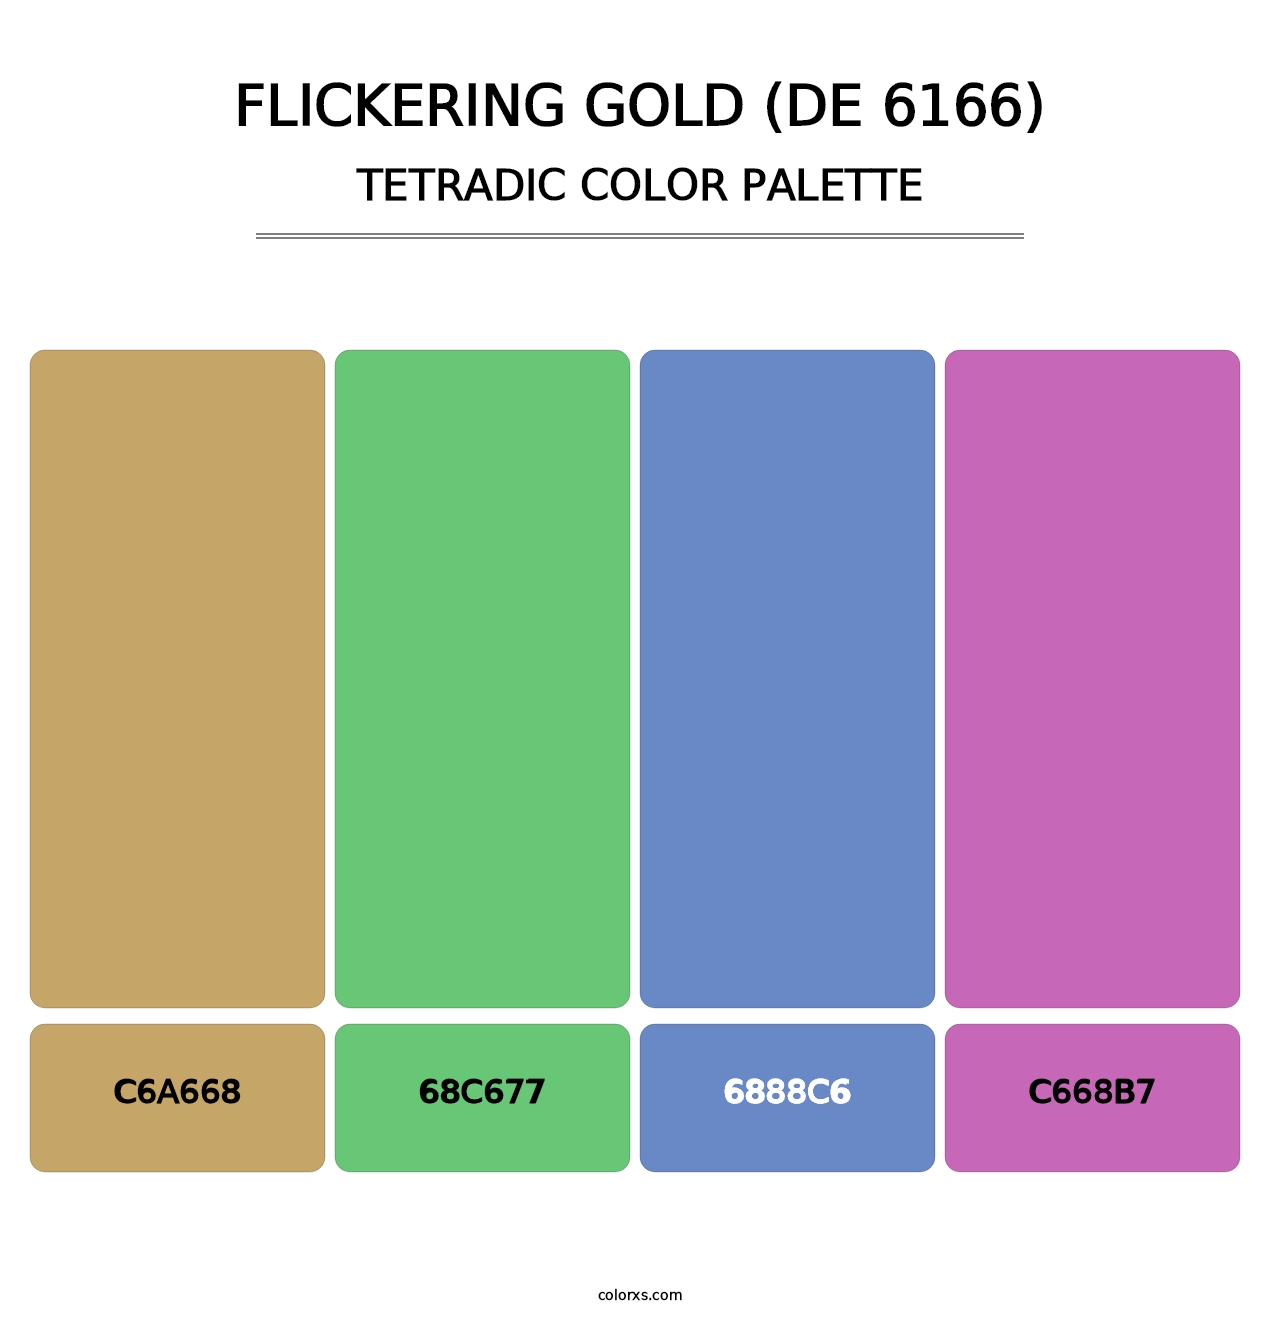 Flickering Gold (DE 6166) - Tetradic Color Palette